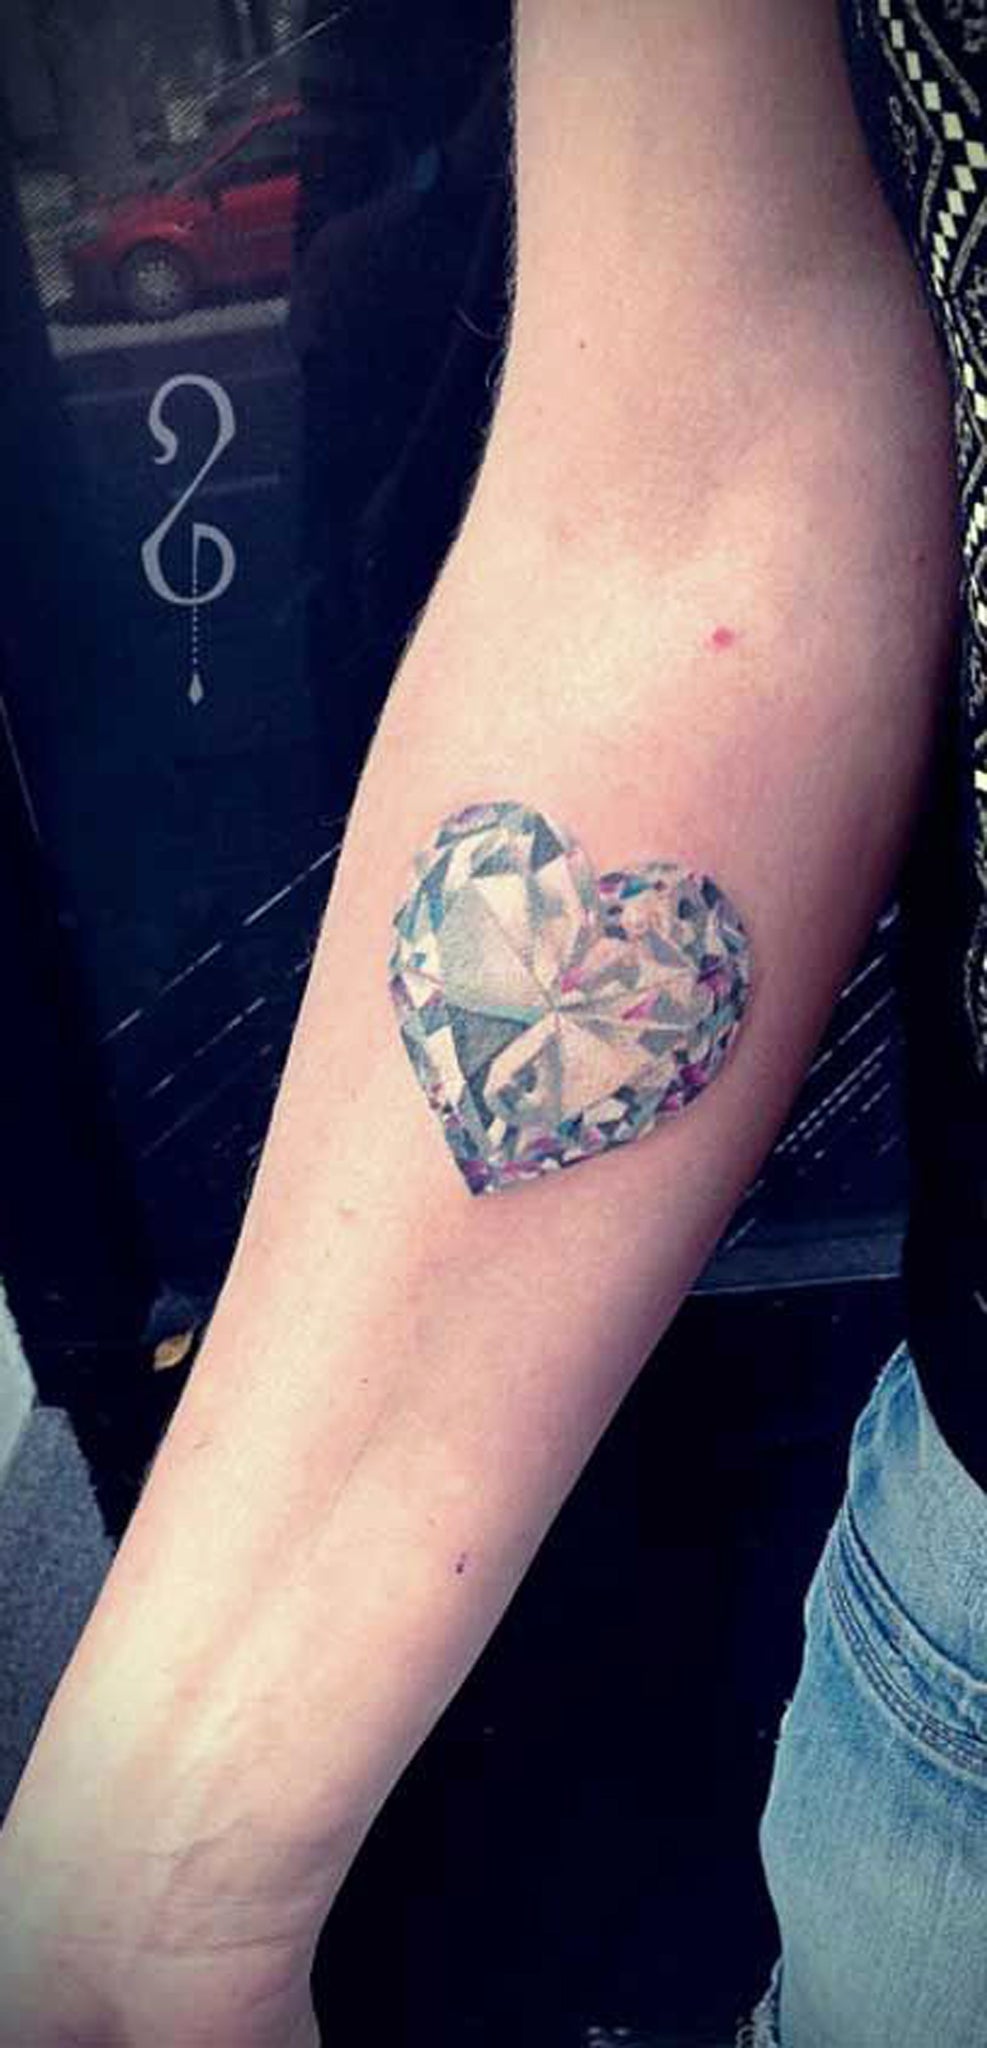 Unique Crystal Heart Forearm Tattoo Ideas for Women - Ideas únicas del tatuaje del antebrazo del corazón cristalino para las mujeres - www.MyBodiArt.com